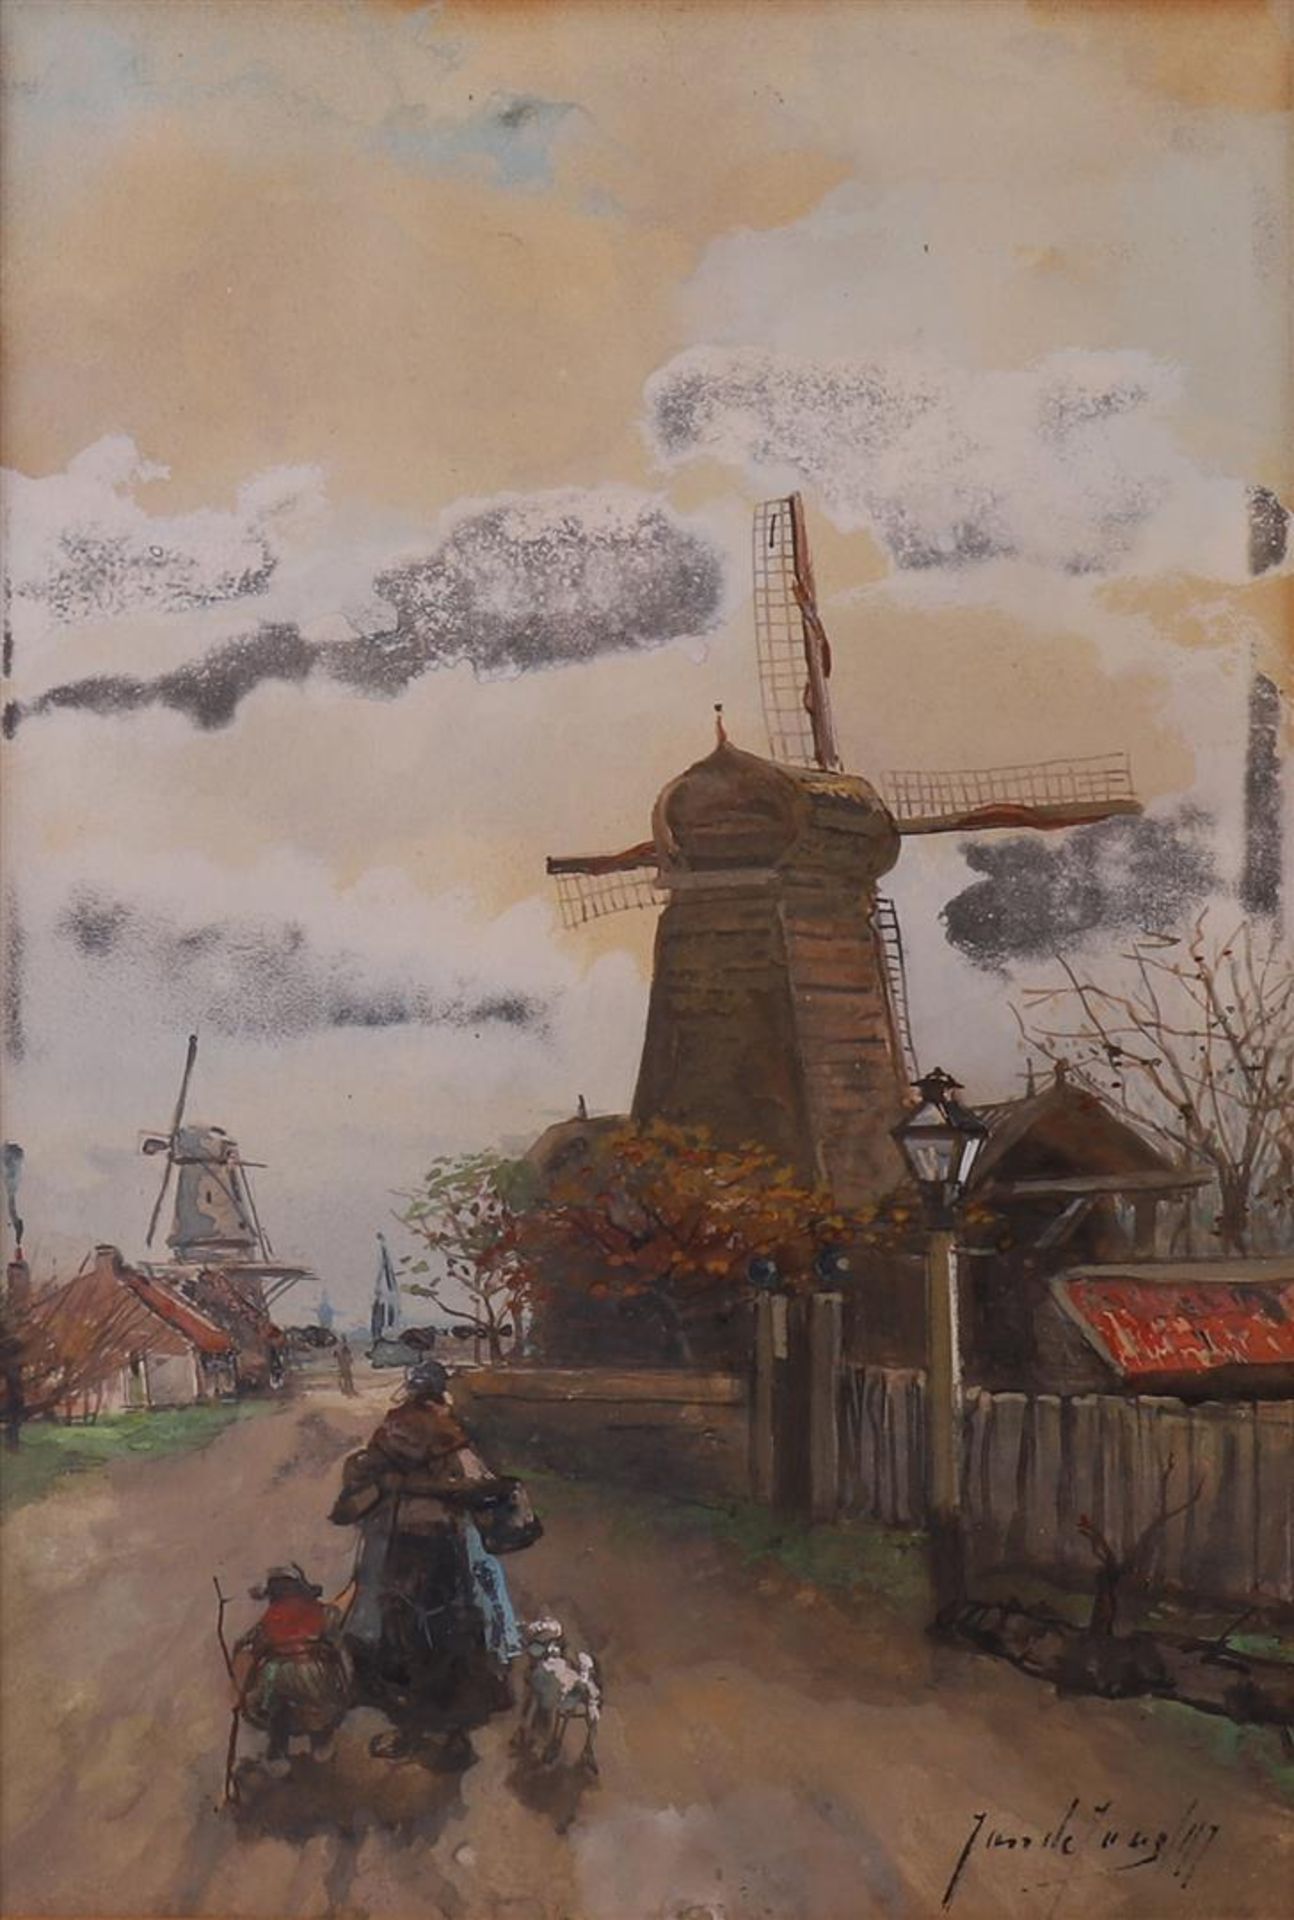 Jong de, Johannes(Jan) (Rotterdam 1864-1901) "Landscape with windmills", signed in full lower - Image 2 of 3